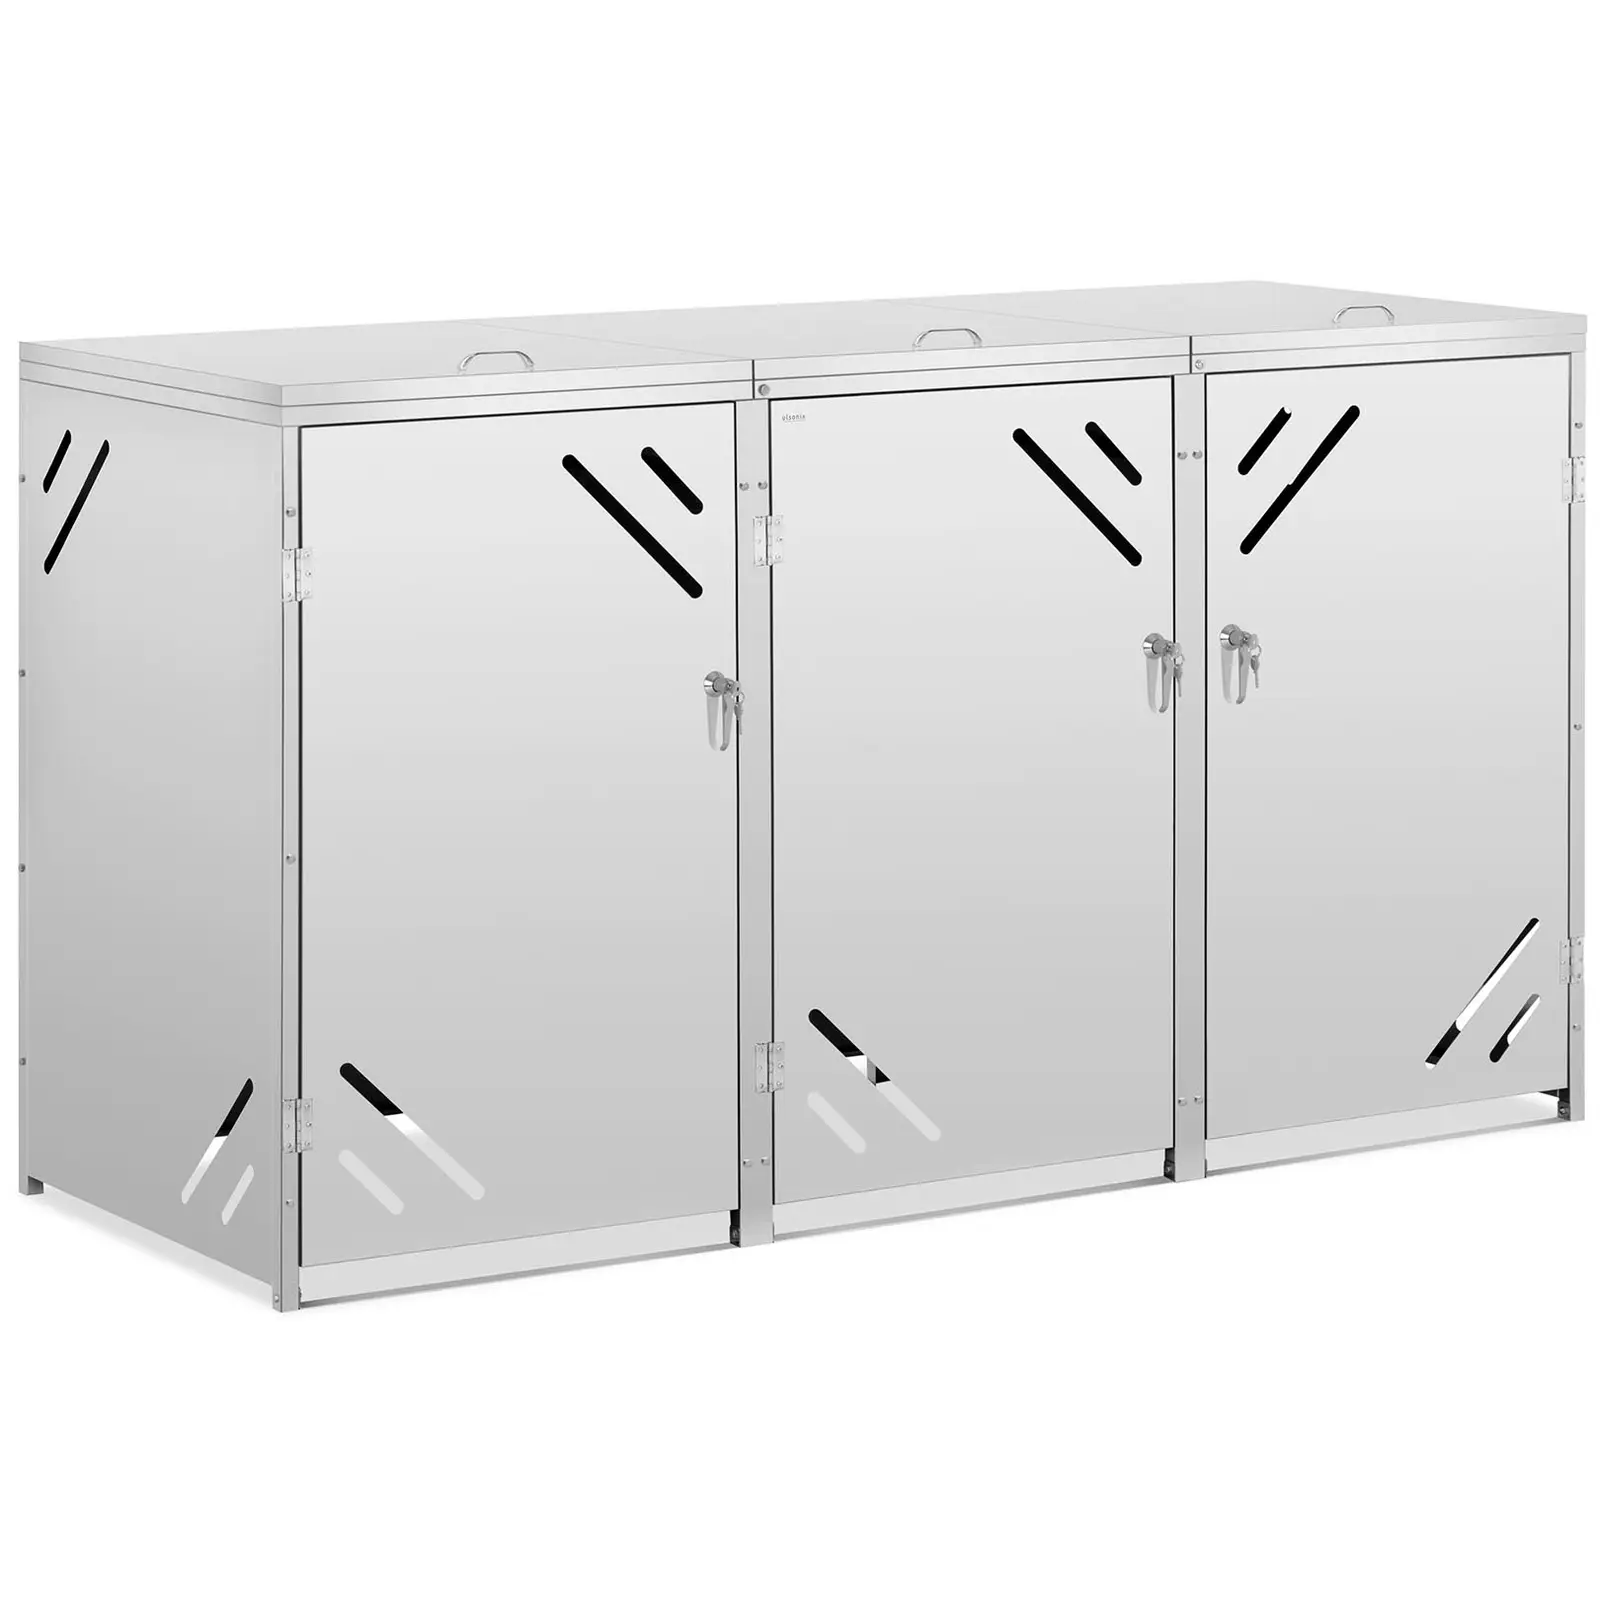 Bin Storage Box - 3 x 240 L - diagonal air slots